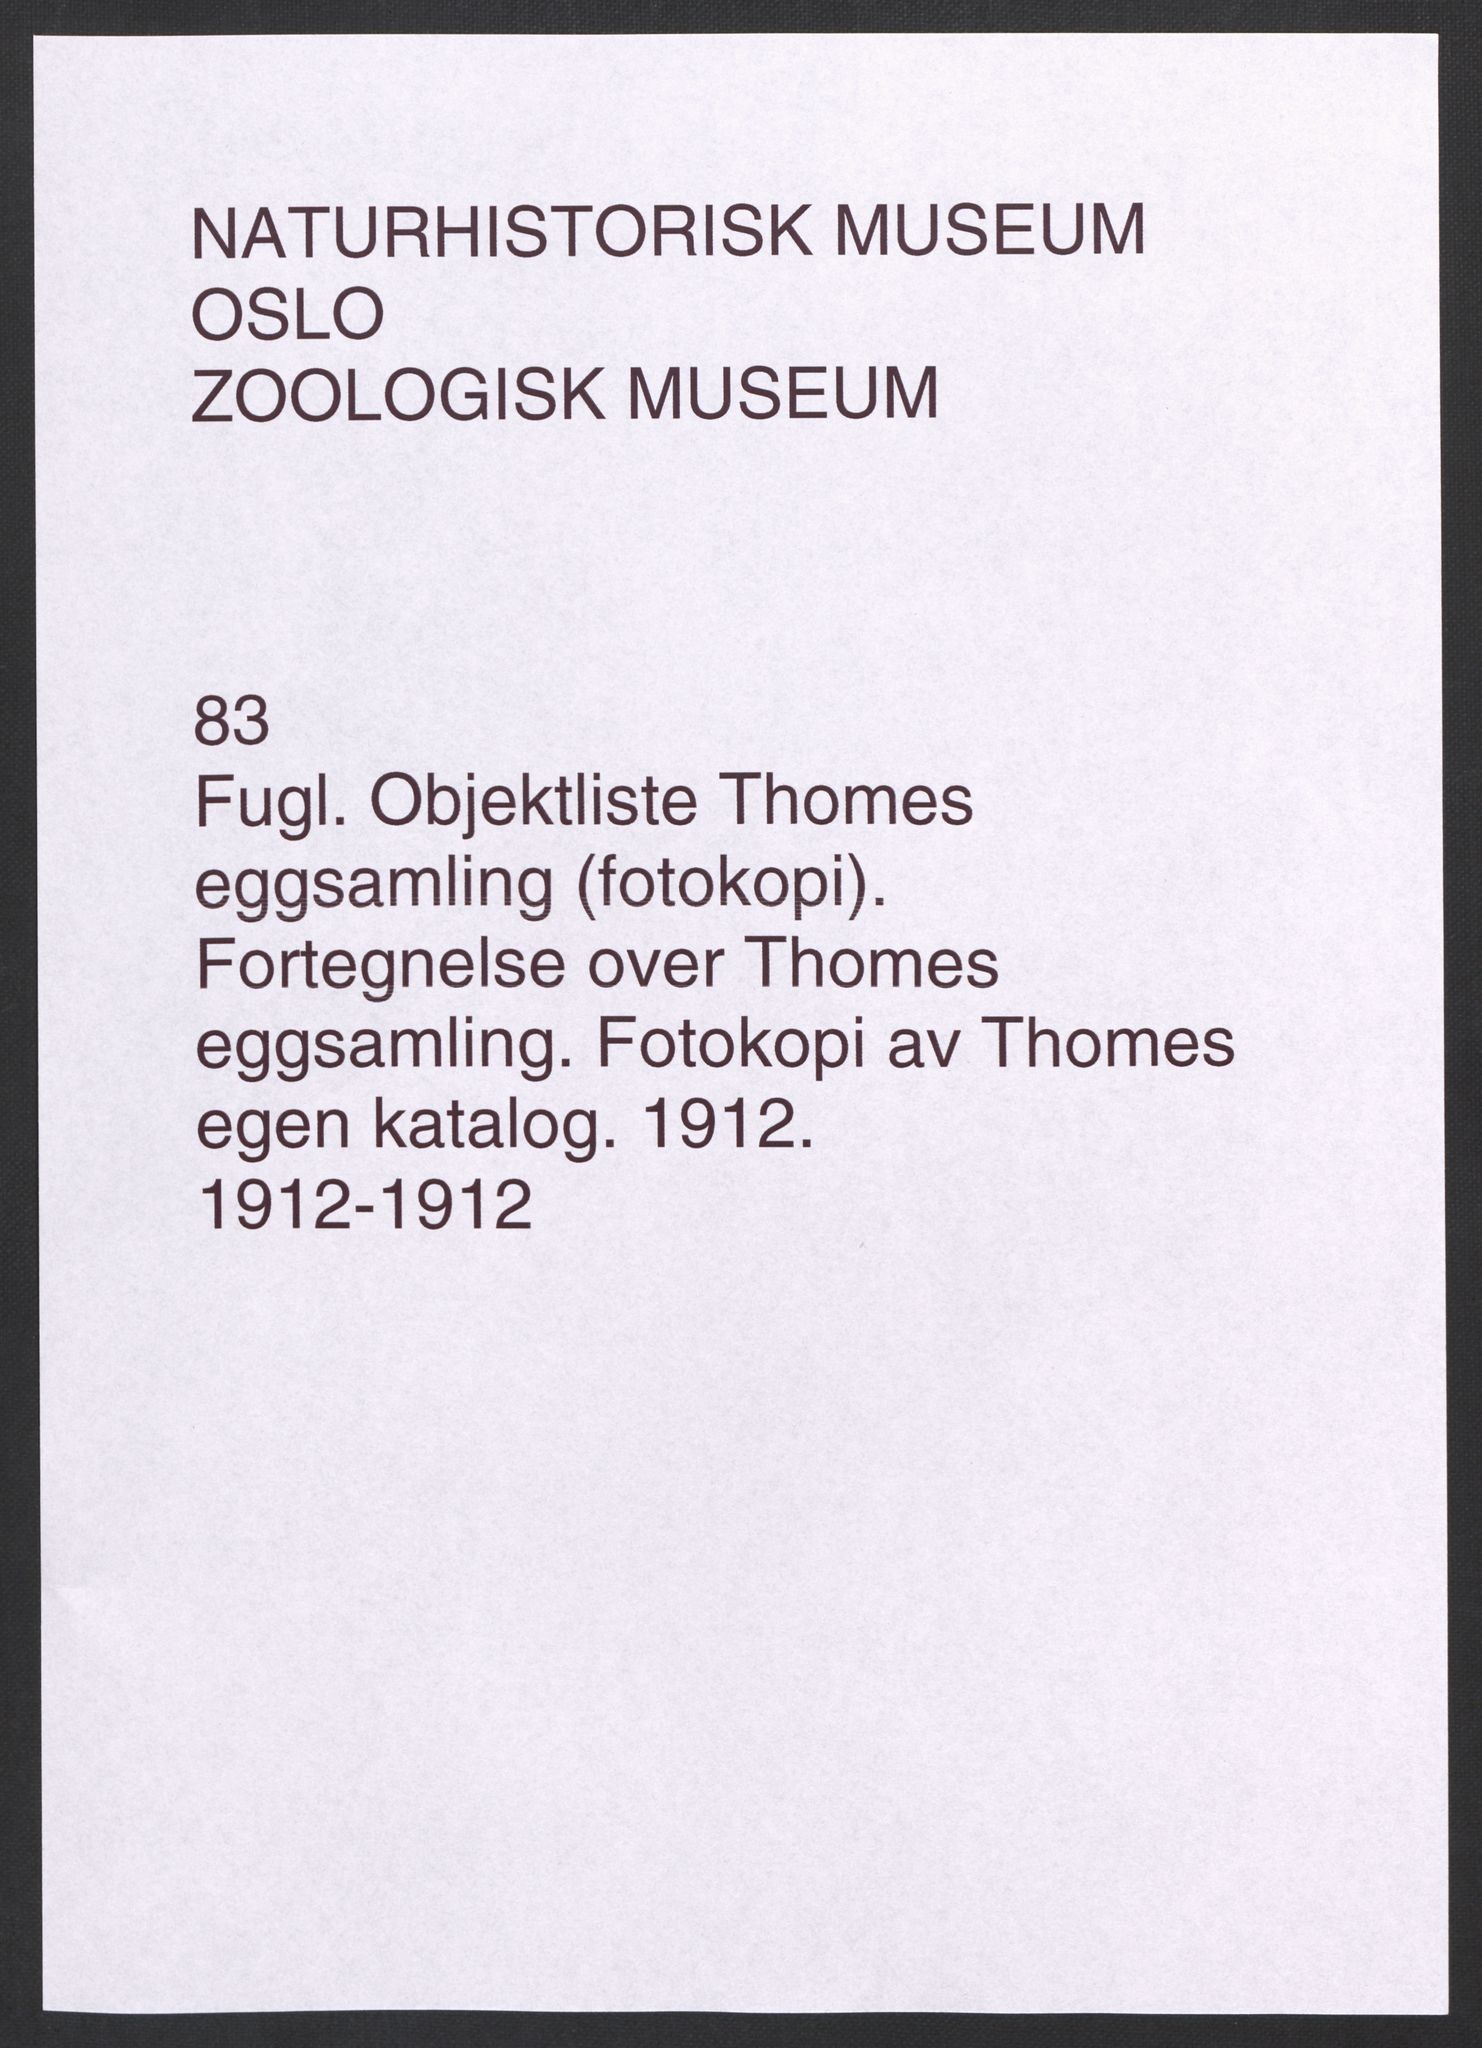 Naturhistorisk museum (Oslo), NHMO/-/2, 1912